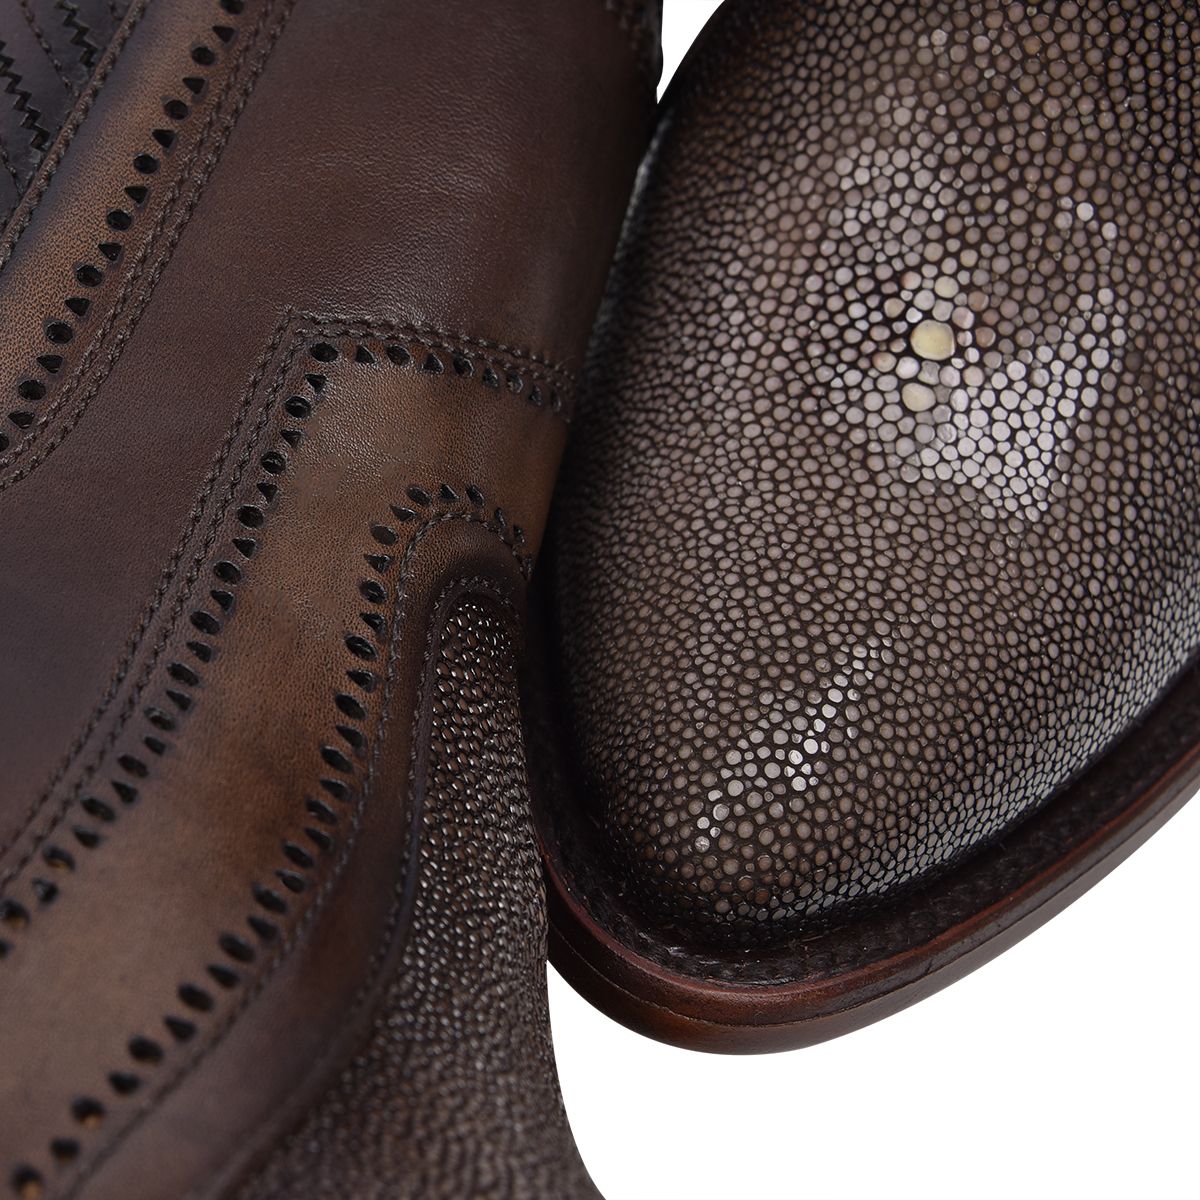 3F94MA - Cuadra brown fashion Paris Texas stingray ankle boots for women-CUADRA-Kuet-Cuadra-Boots